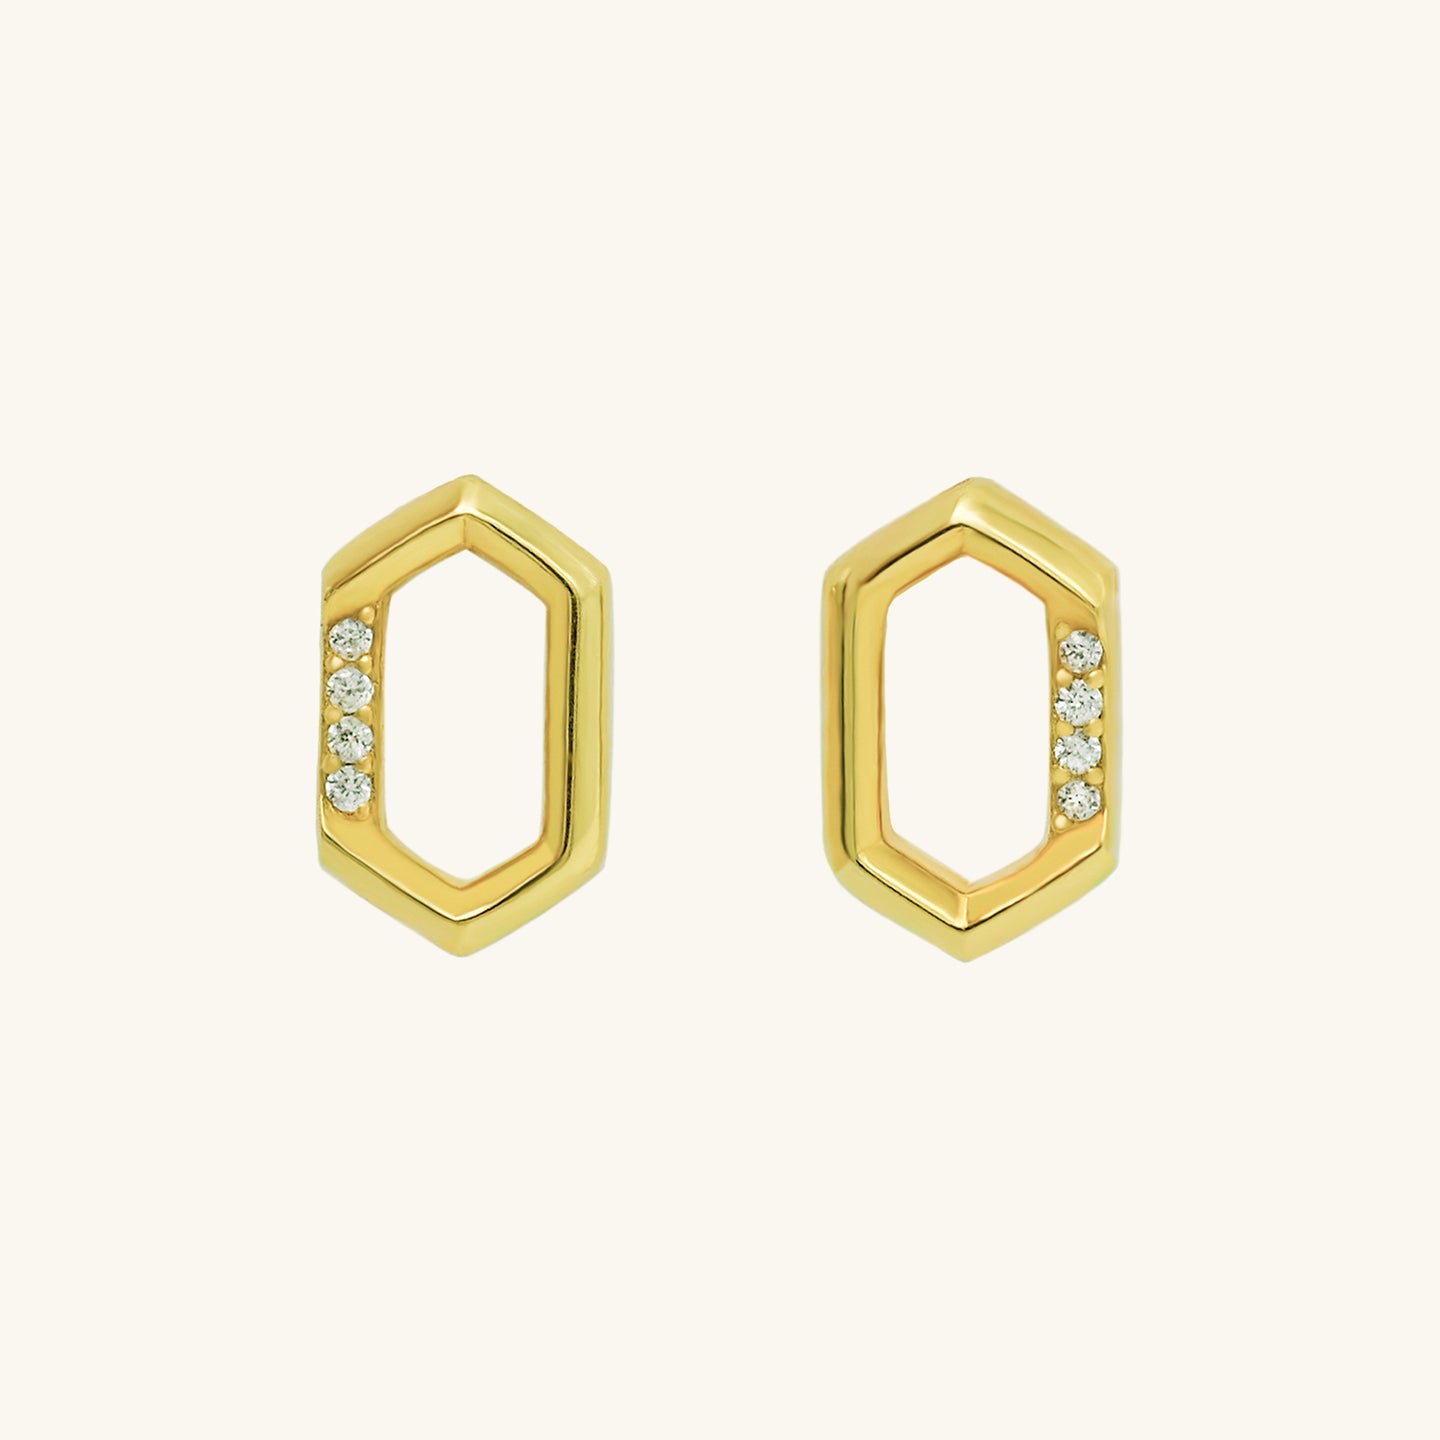 Erd Hexagonal CZ Stud Earrings